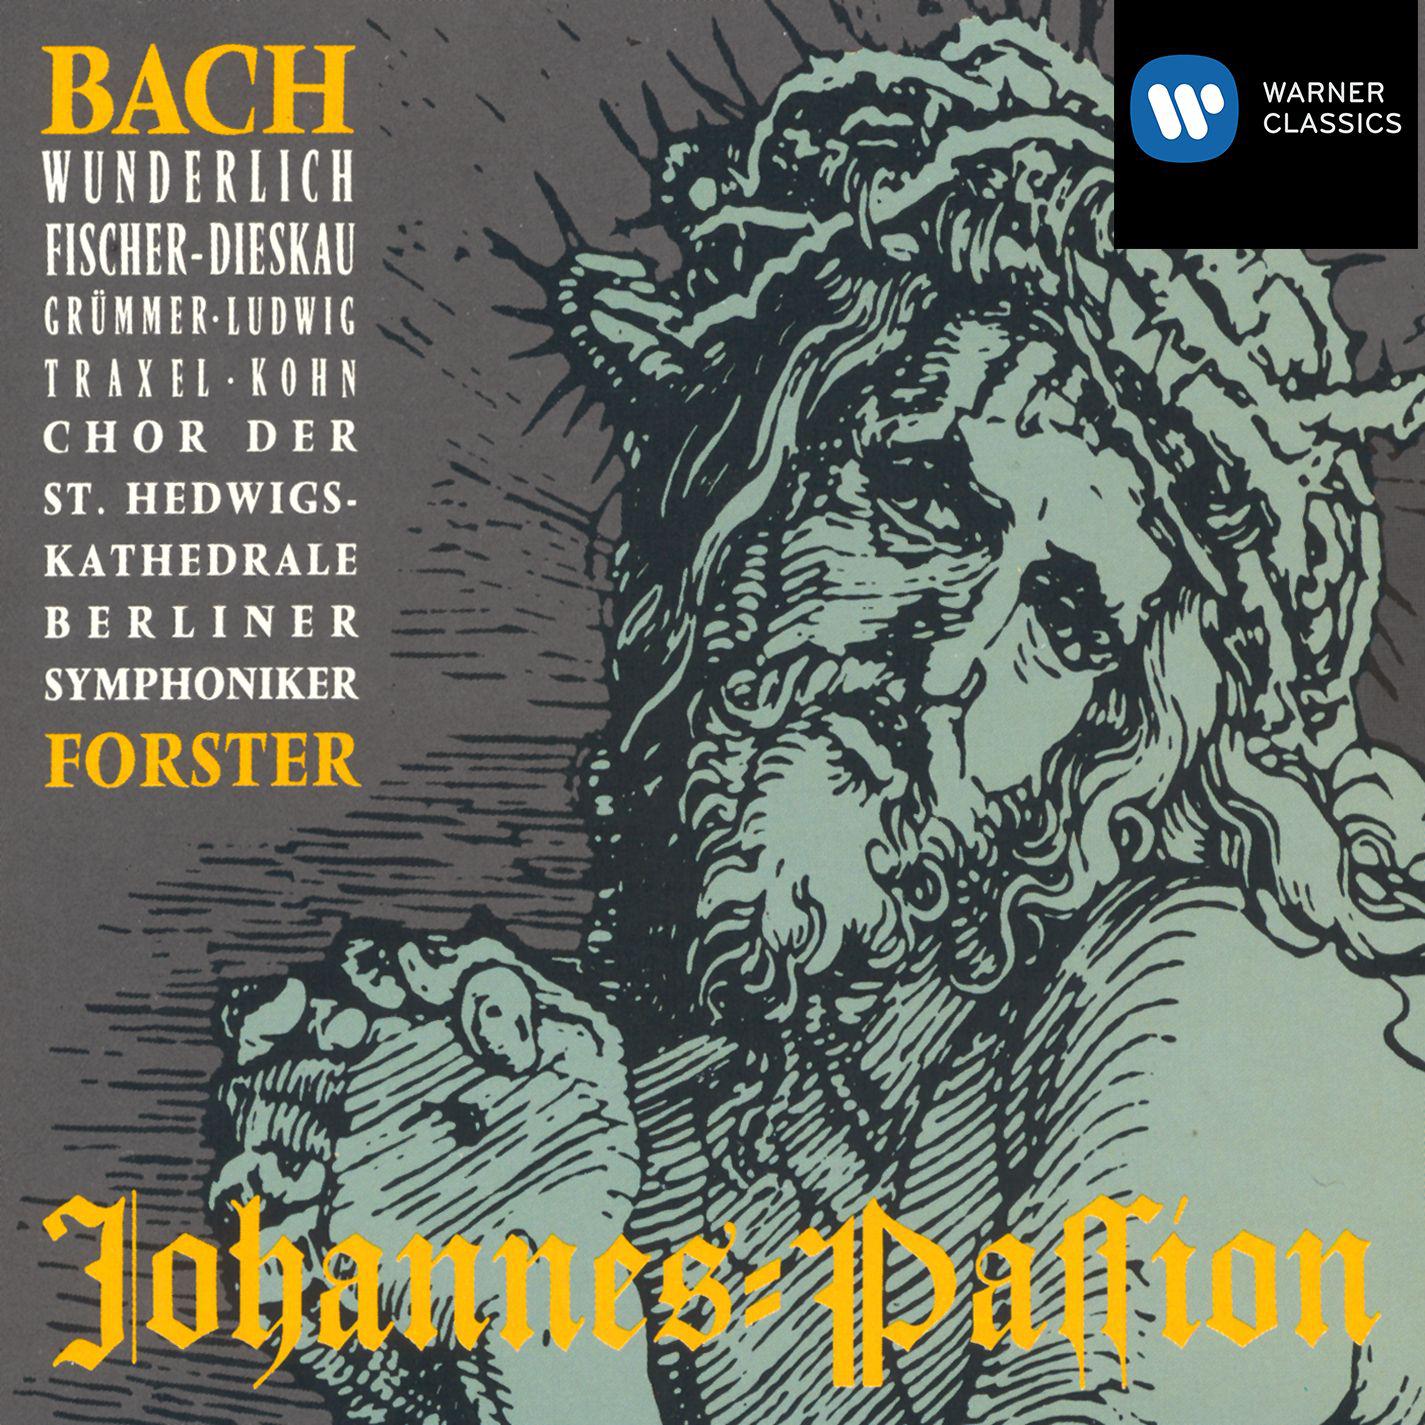 Berliner Symphoniker - Johannes-Passion, BWV 245, Pt. 2:No. 37, Choral. 